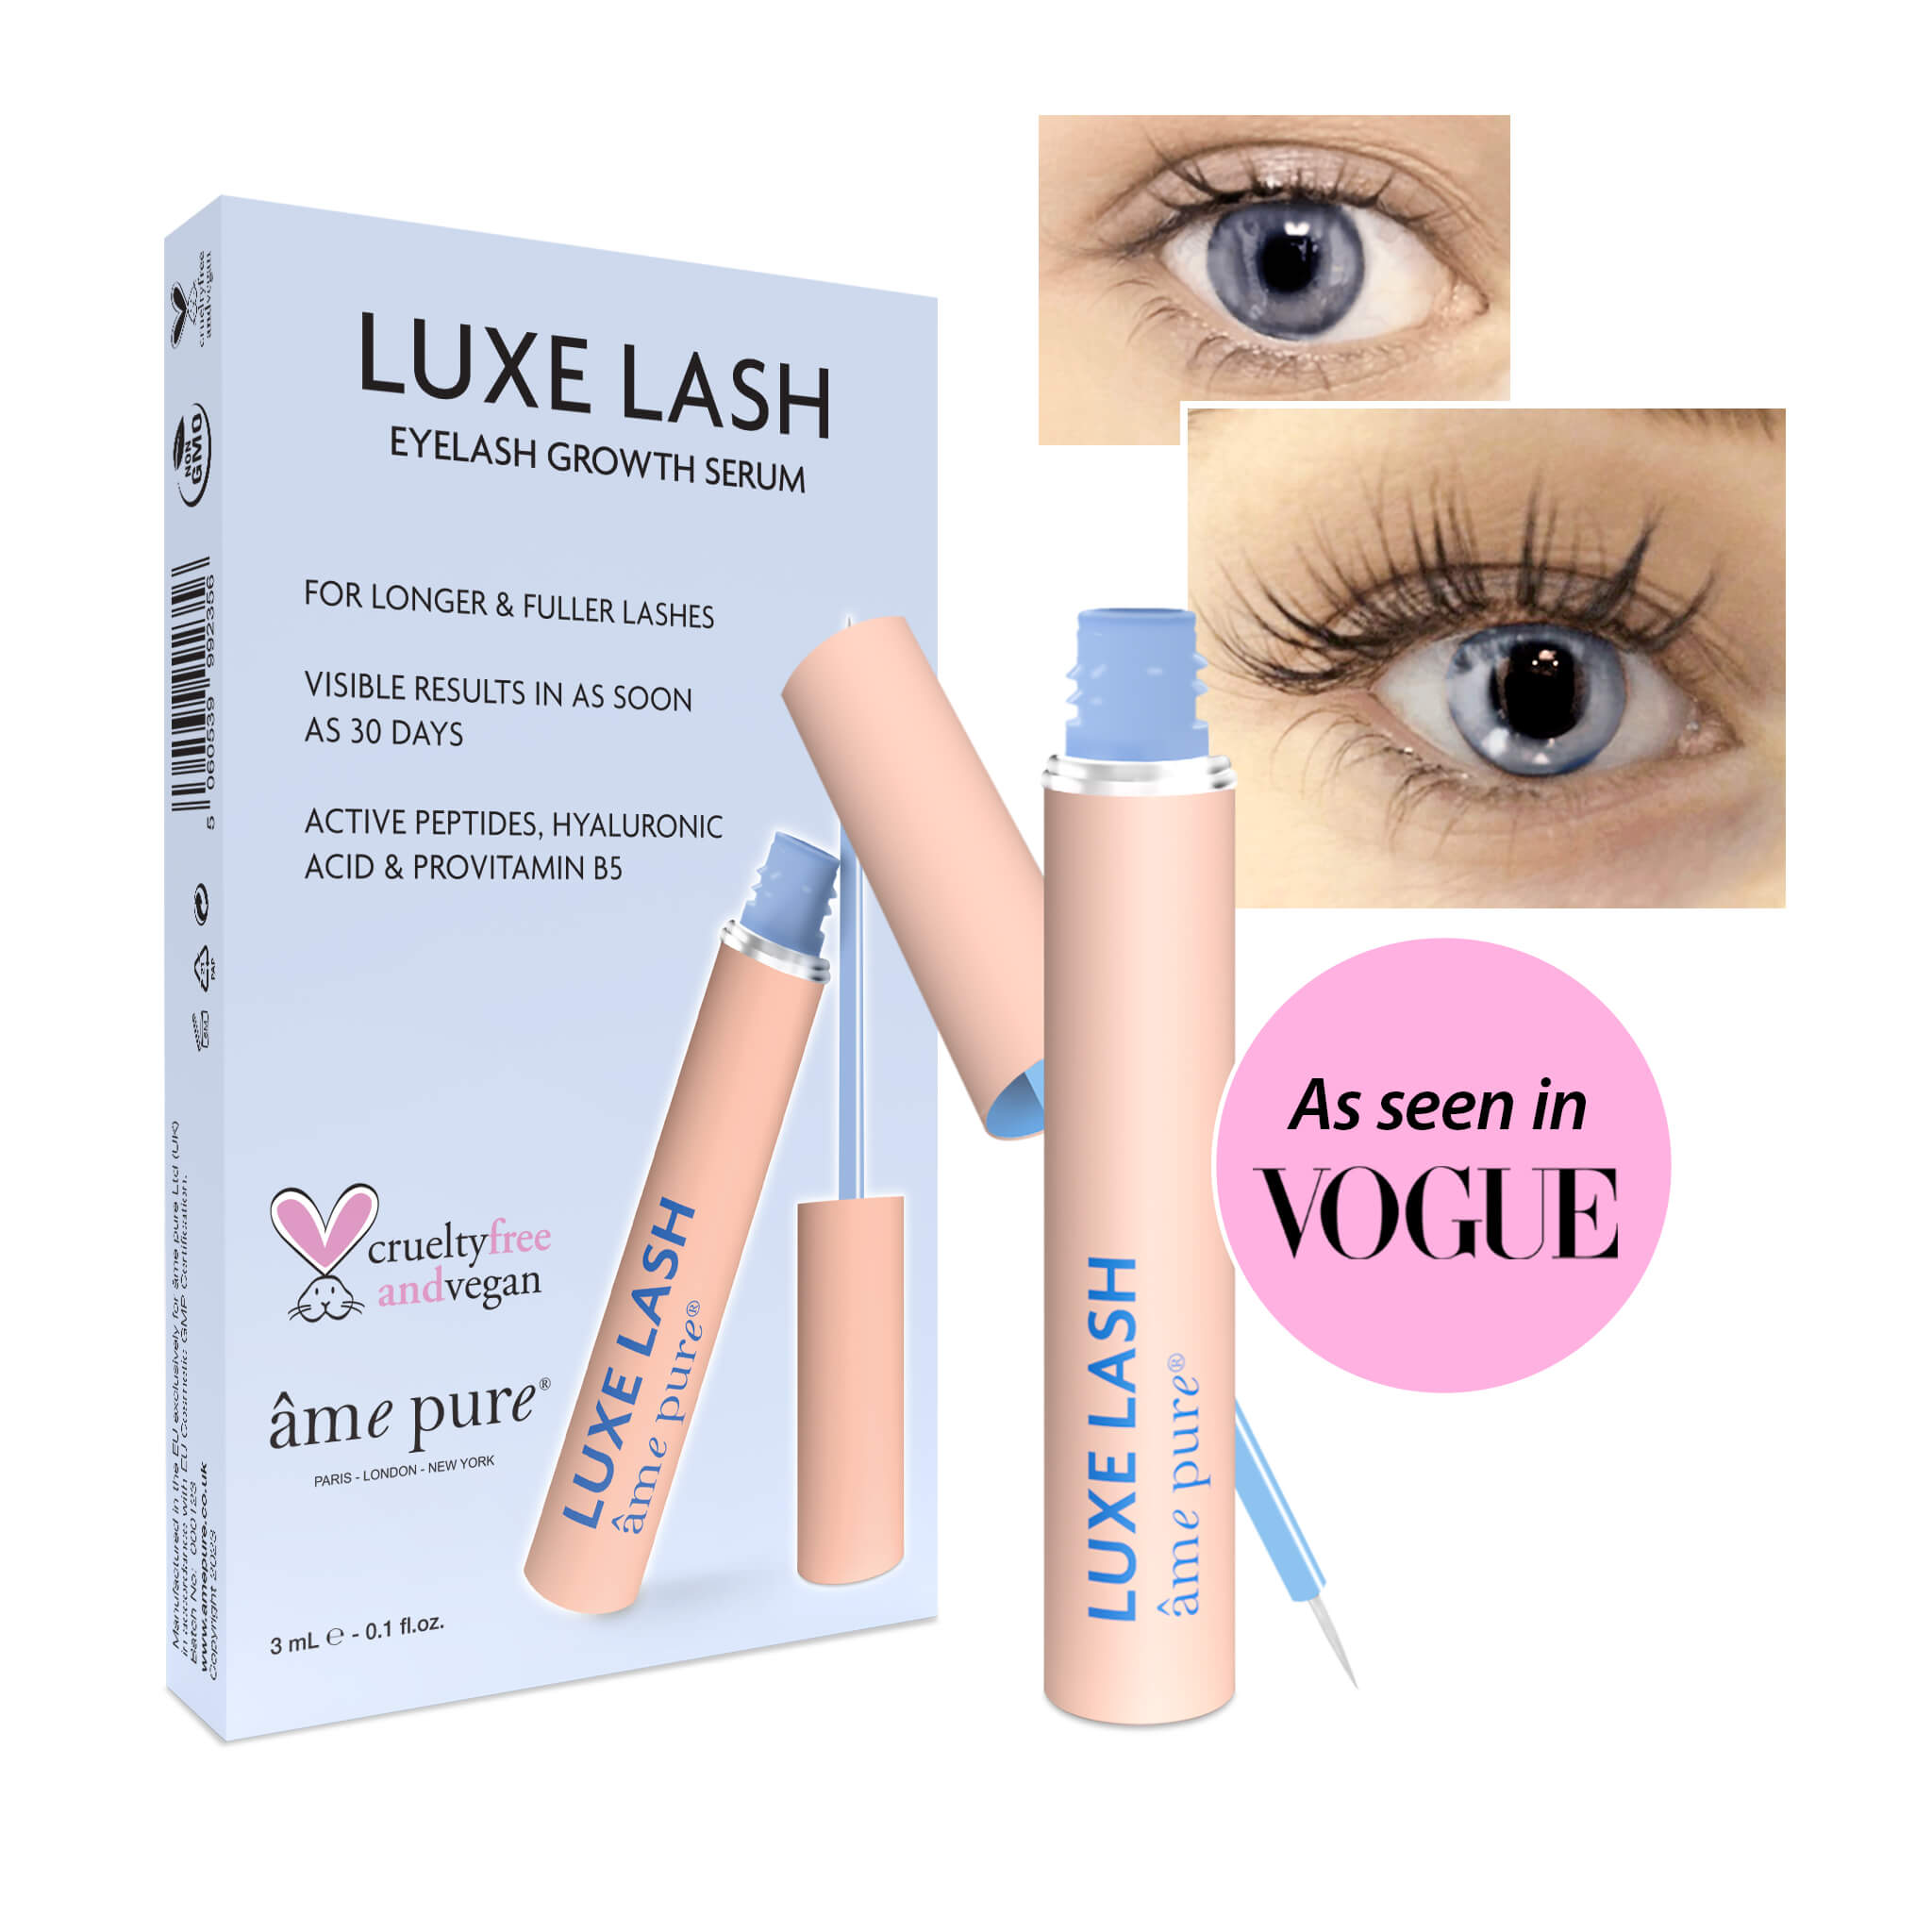 LUXE LASH, Eyelash Growth Serum